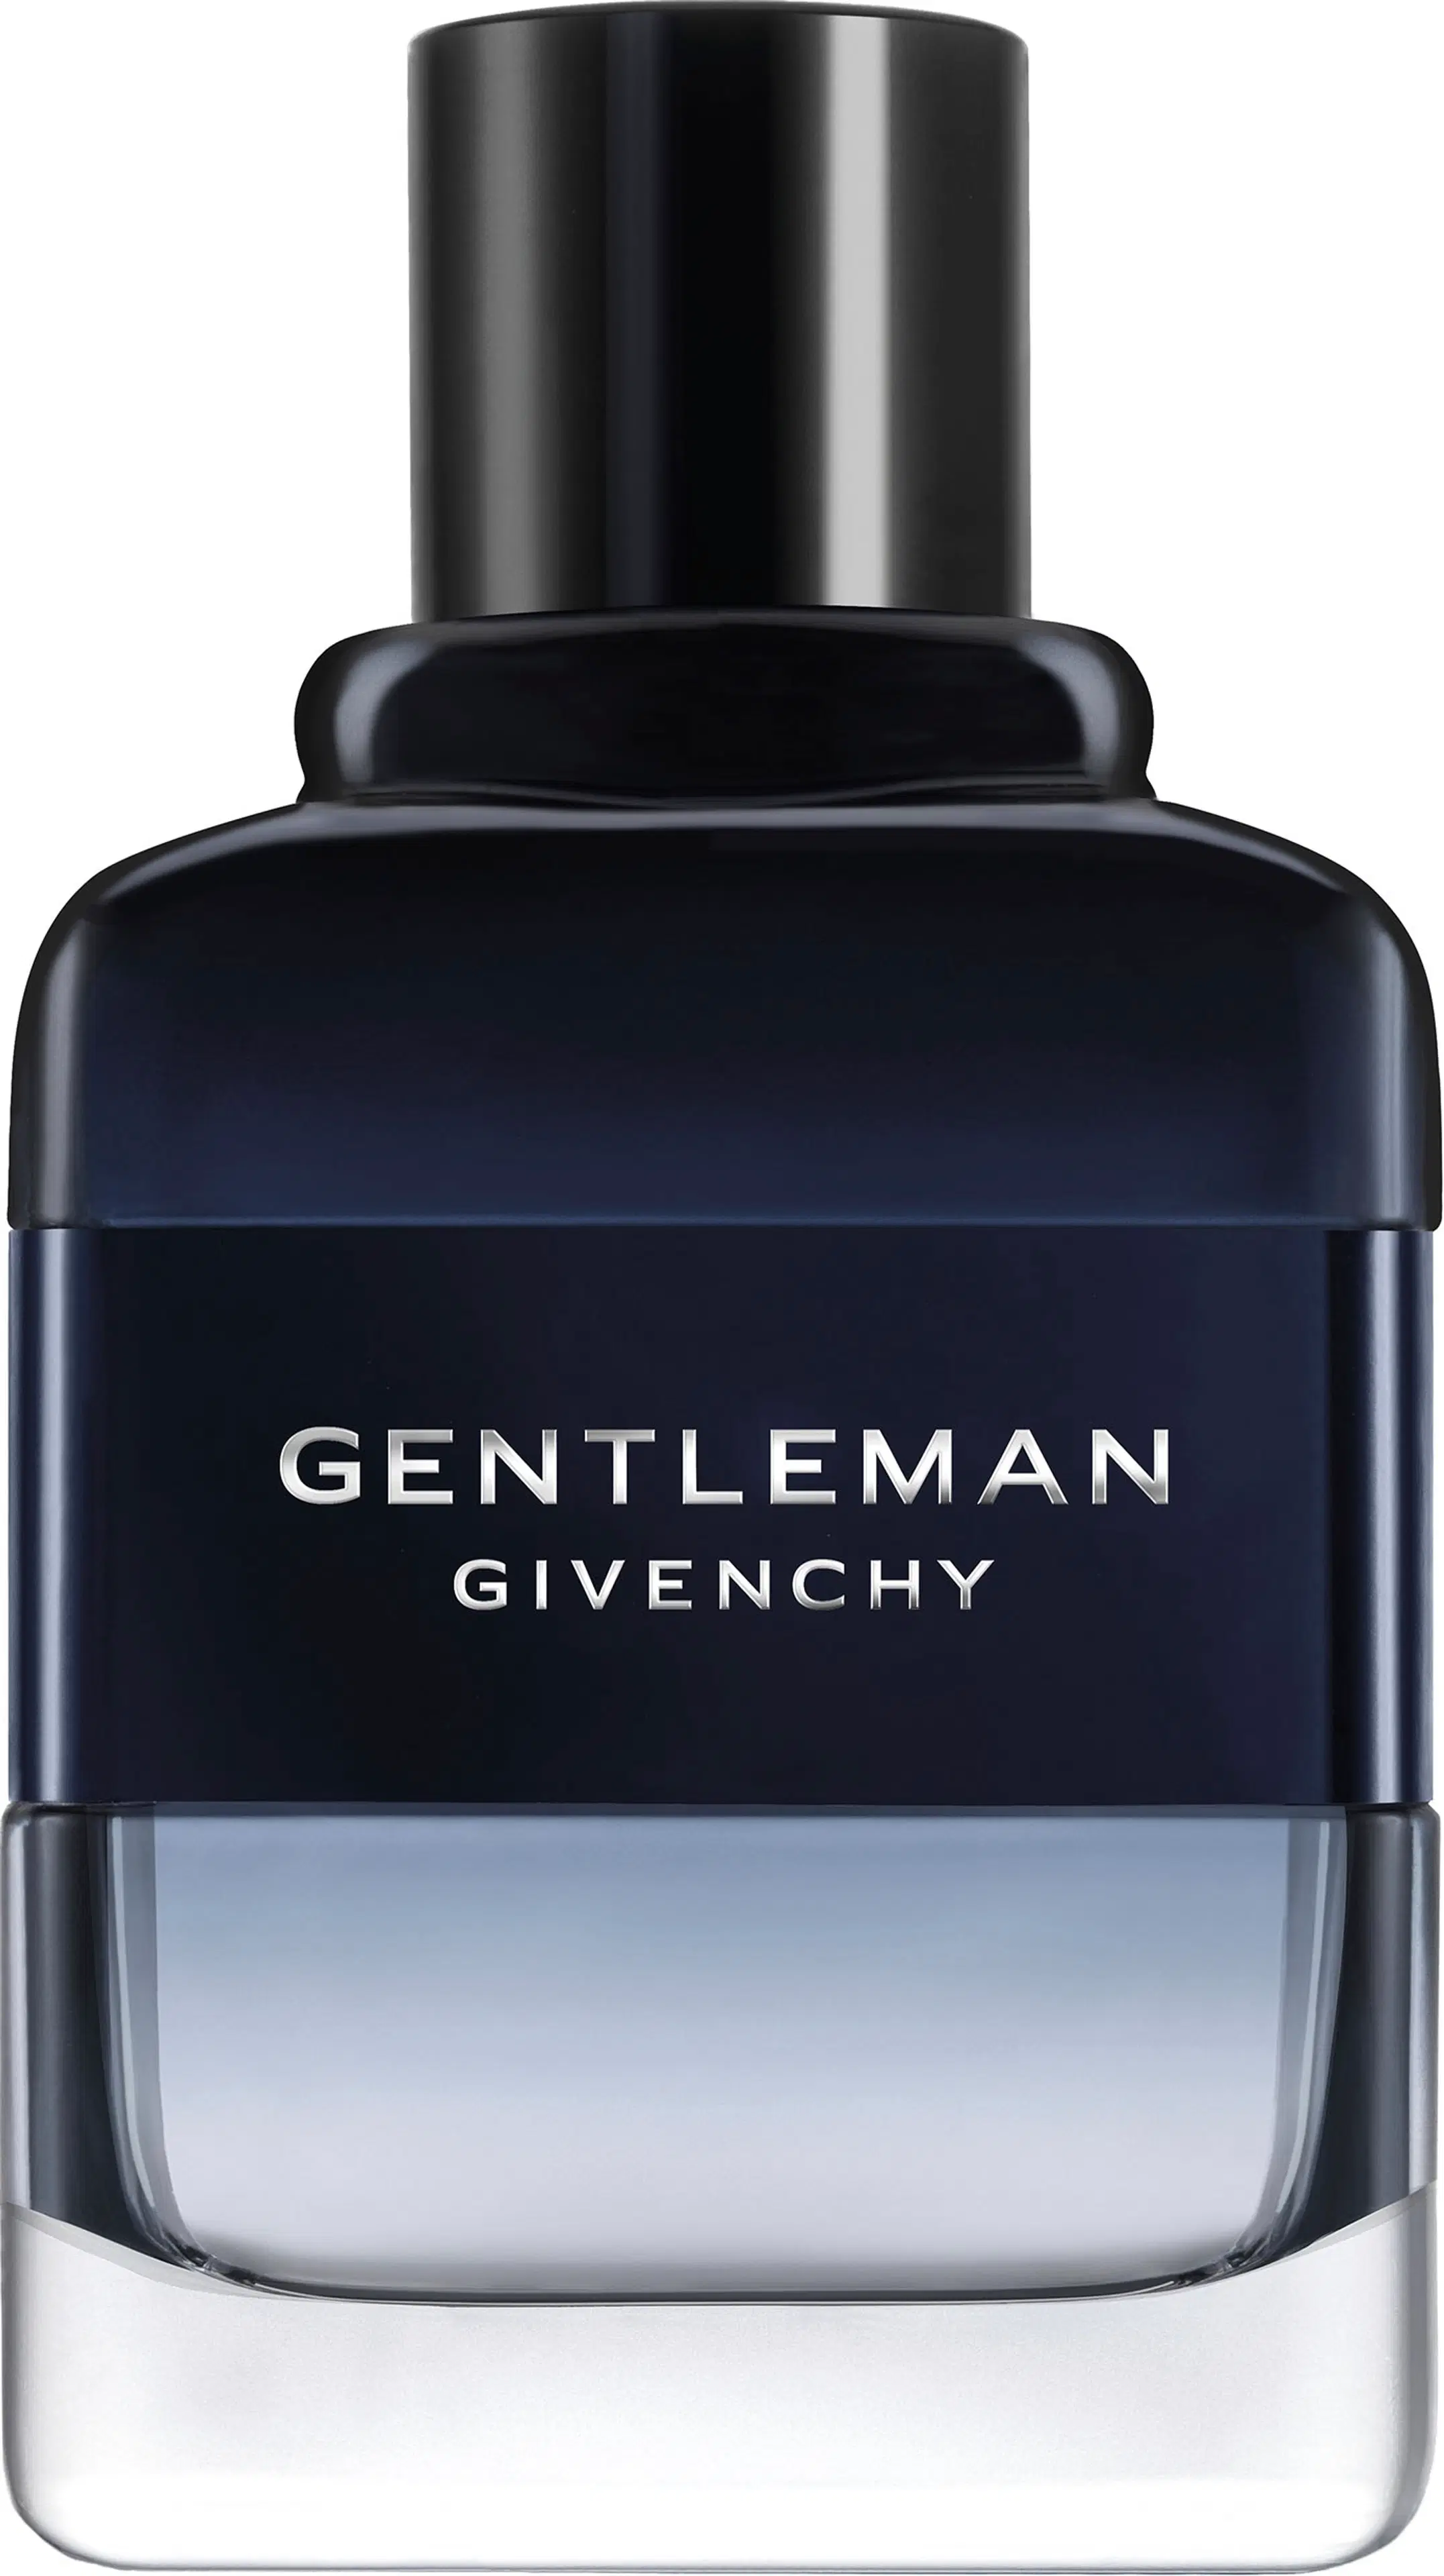 Givenchy Gentleman 21 EdT Intense 60ml